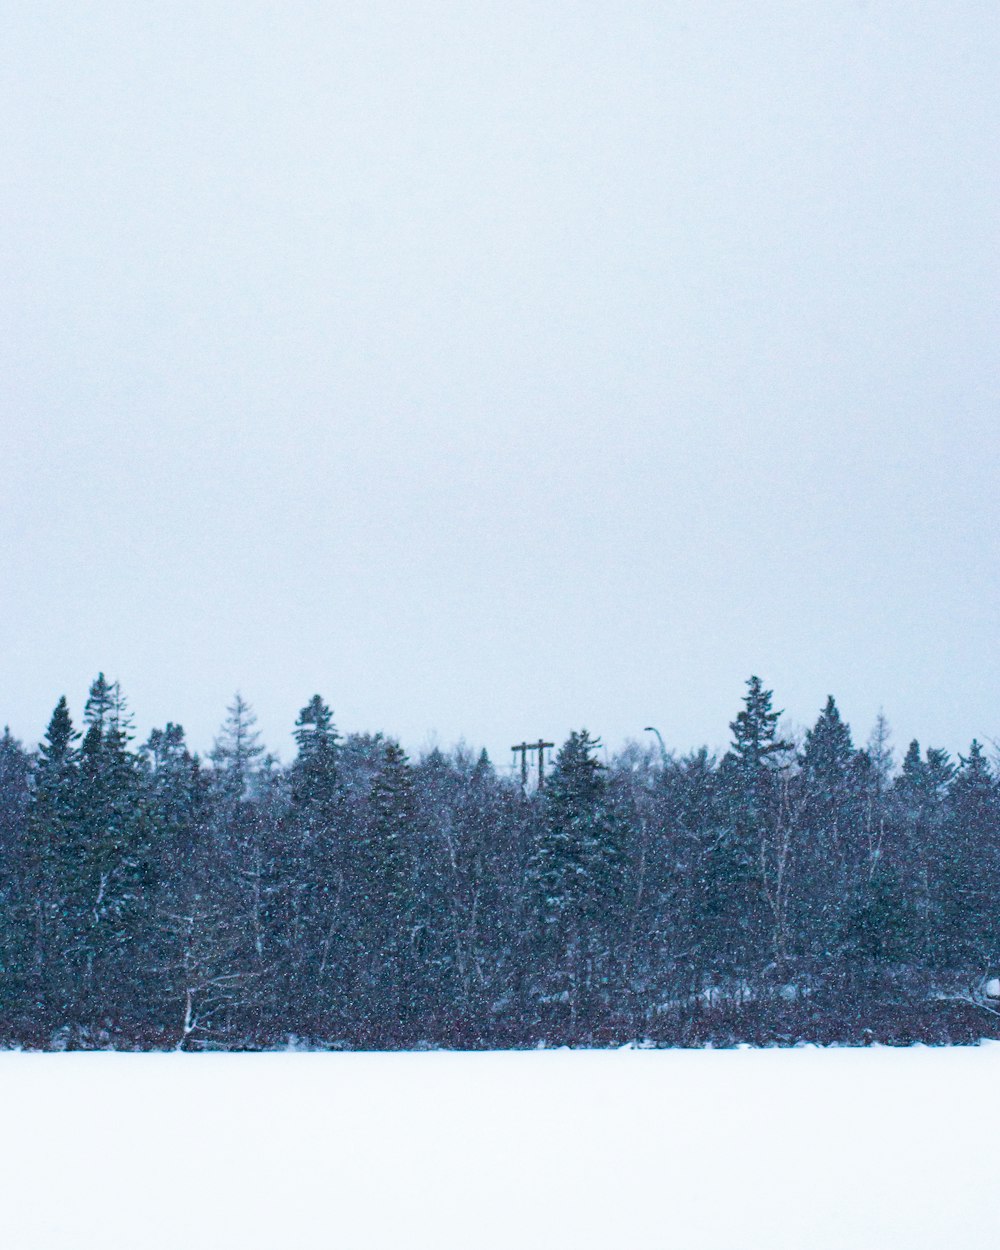 trees on snow field